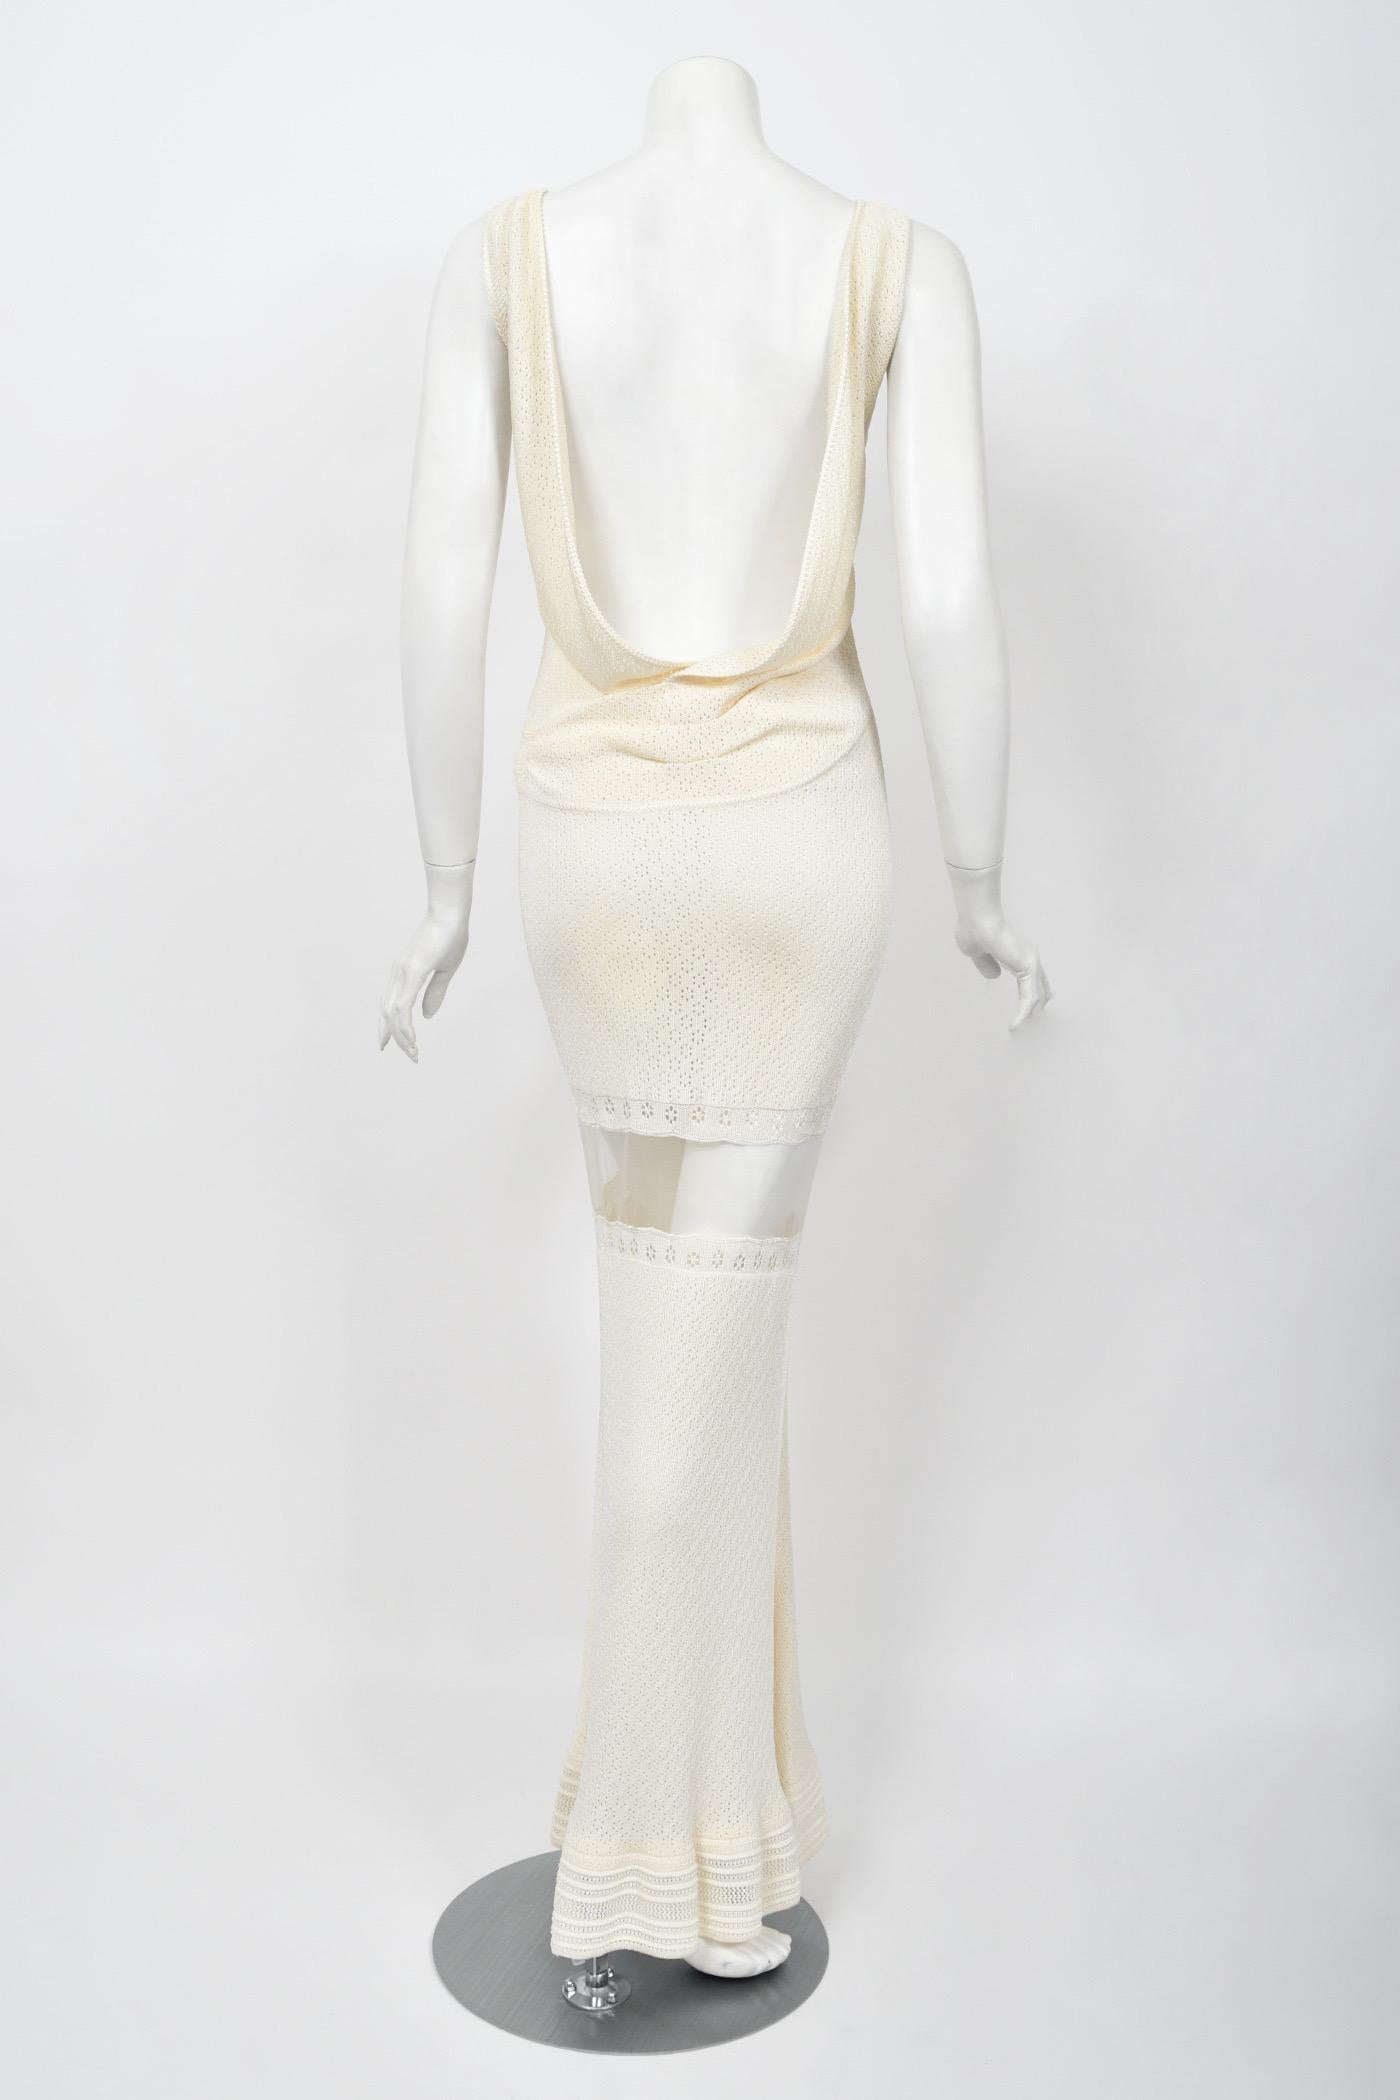 1998 John Galliano Runway Ivory Stretch Knit Sheer Bias-Cut Backless Bridal Gown 13